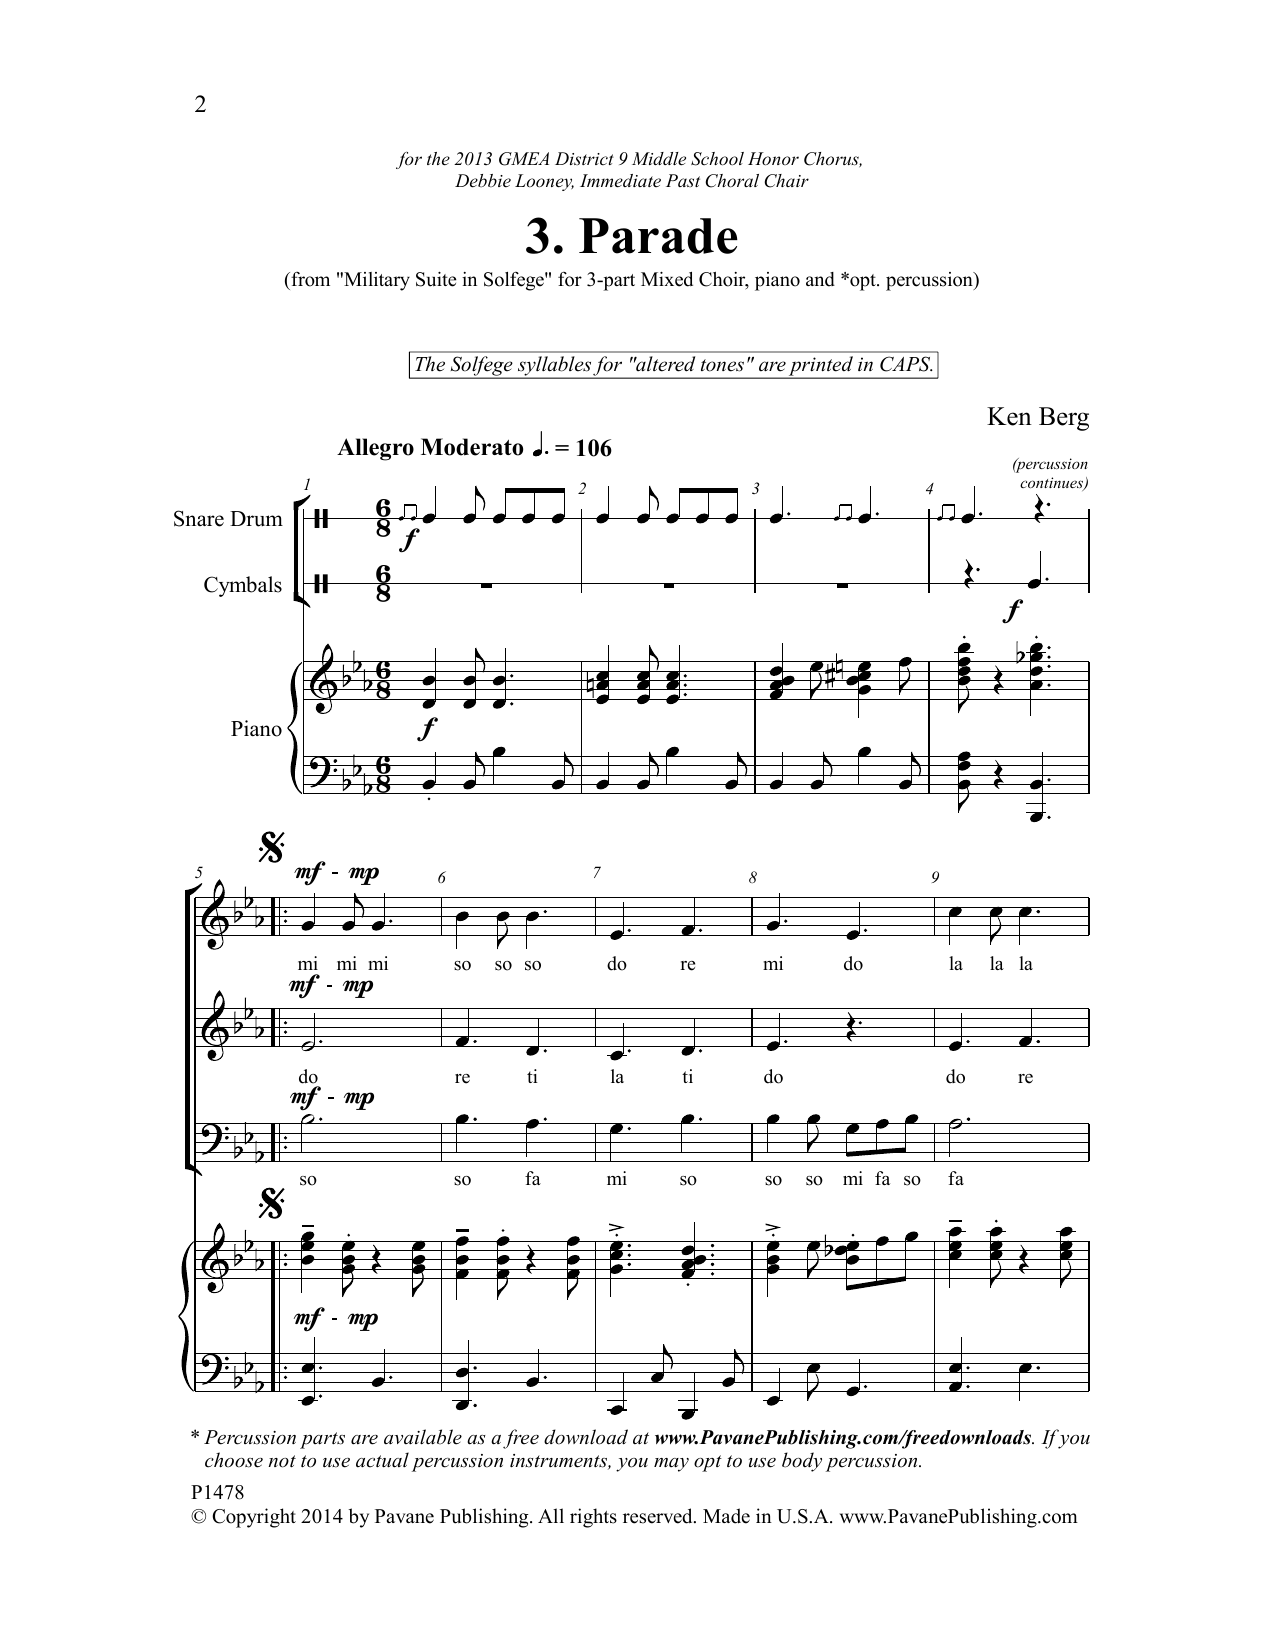 Ken Berg Parade Sheet Music Notes & Chords for Choral - Download or Print PDF